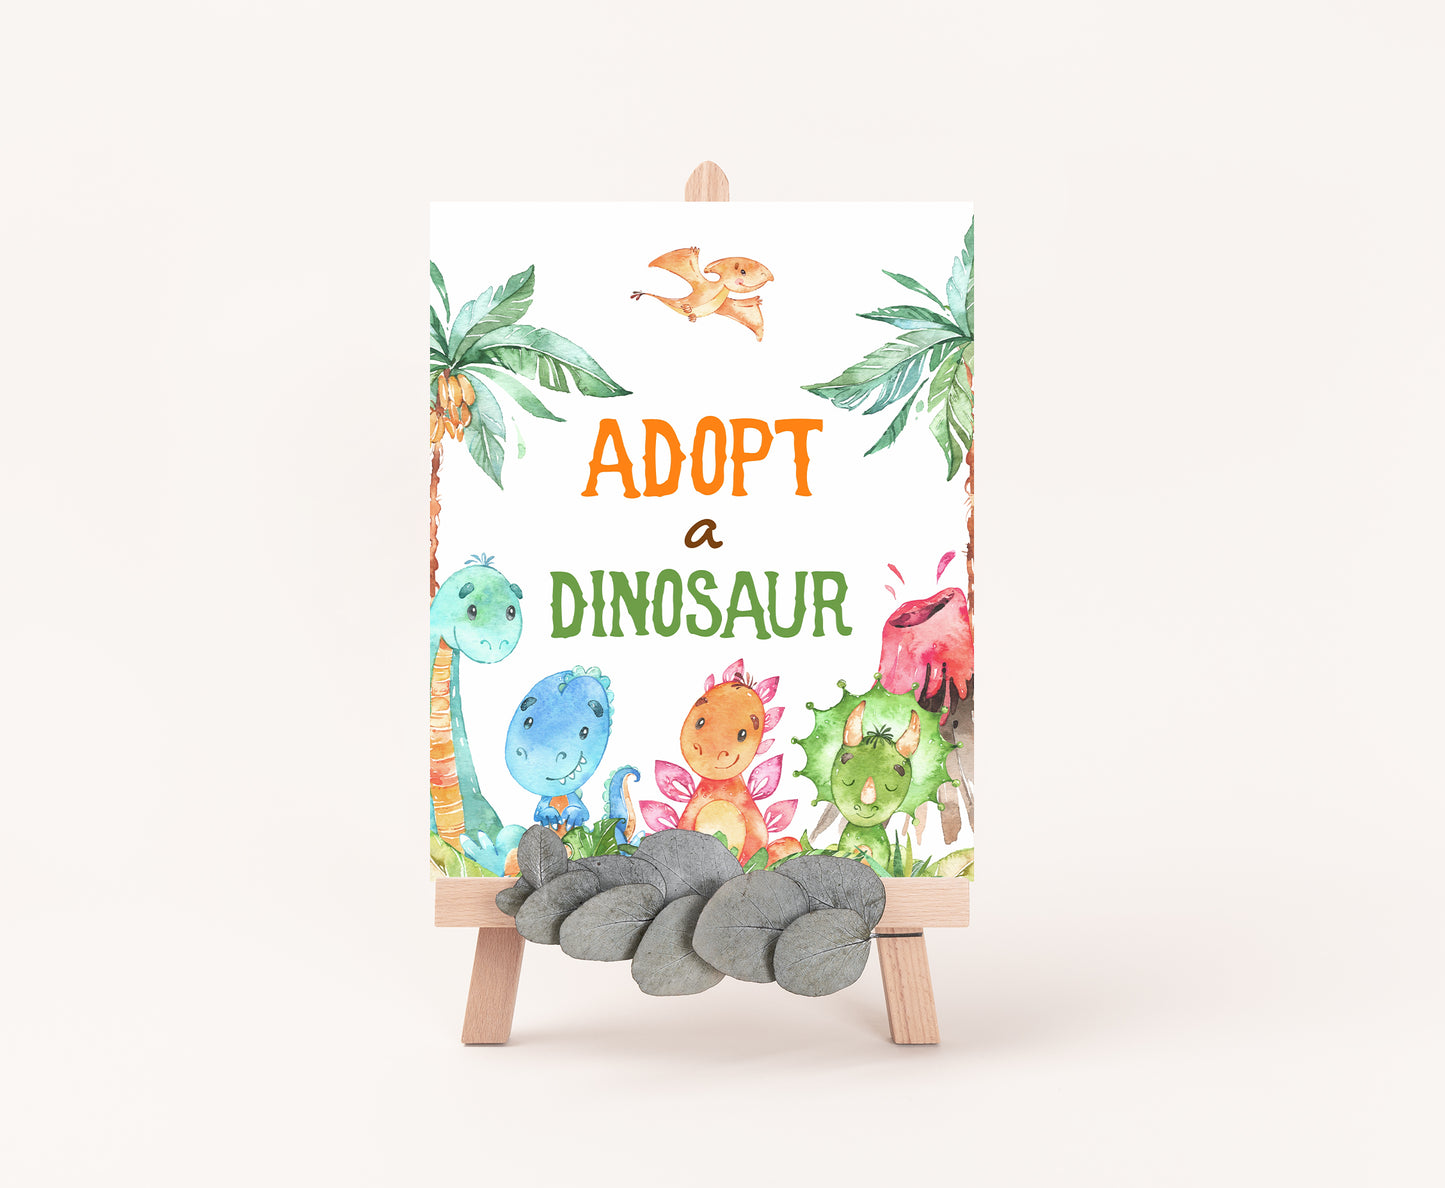 Adopt a Dinosaur table Sign | Dinosaur Themed Party Table Decorations - 08A